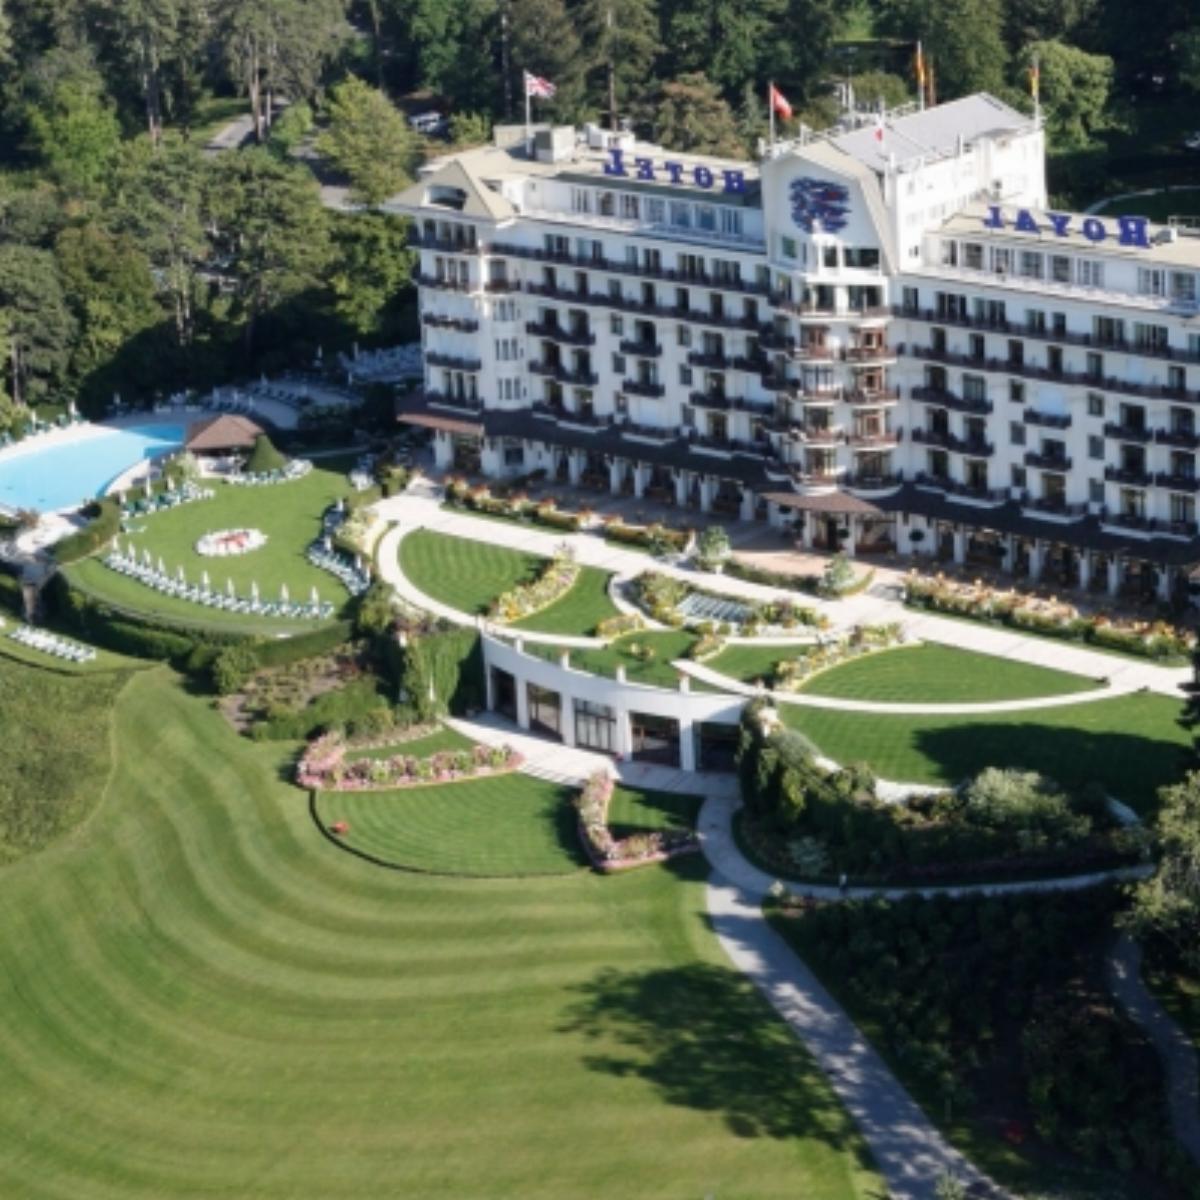 Royal Hotel Evian France